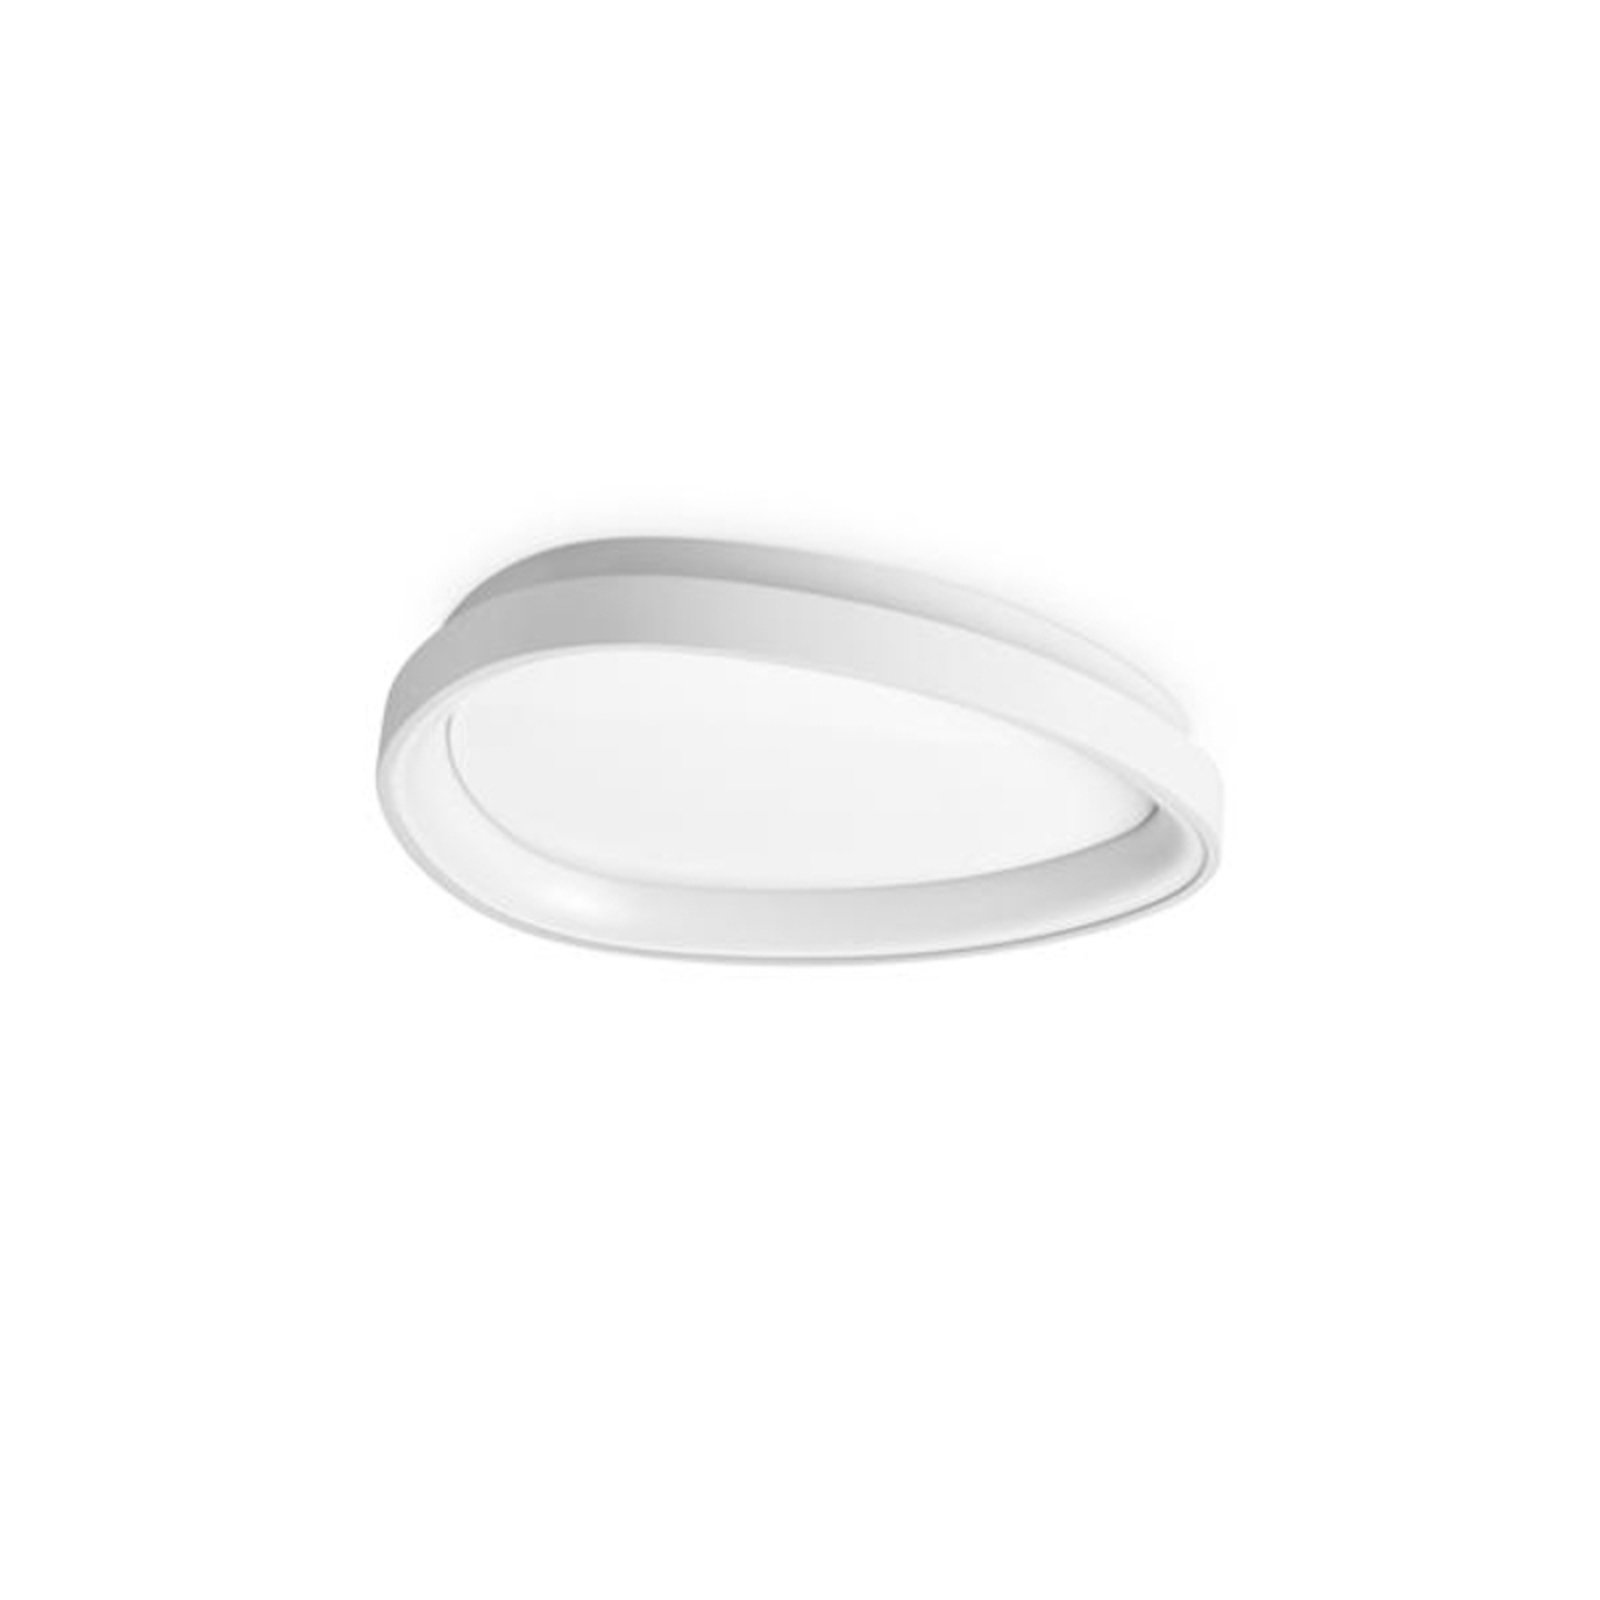 Ideal Lux Gemini LED ceiling light, white, 42.5 cm, on/off